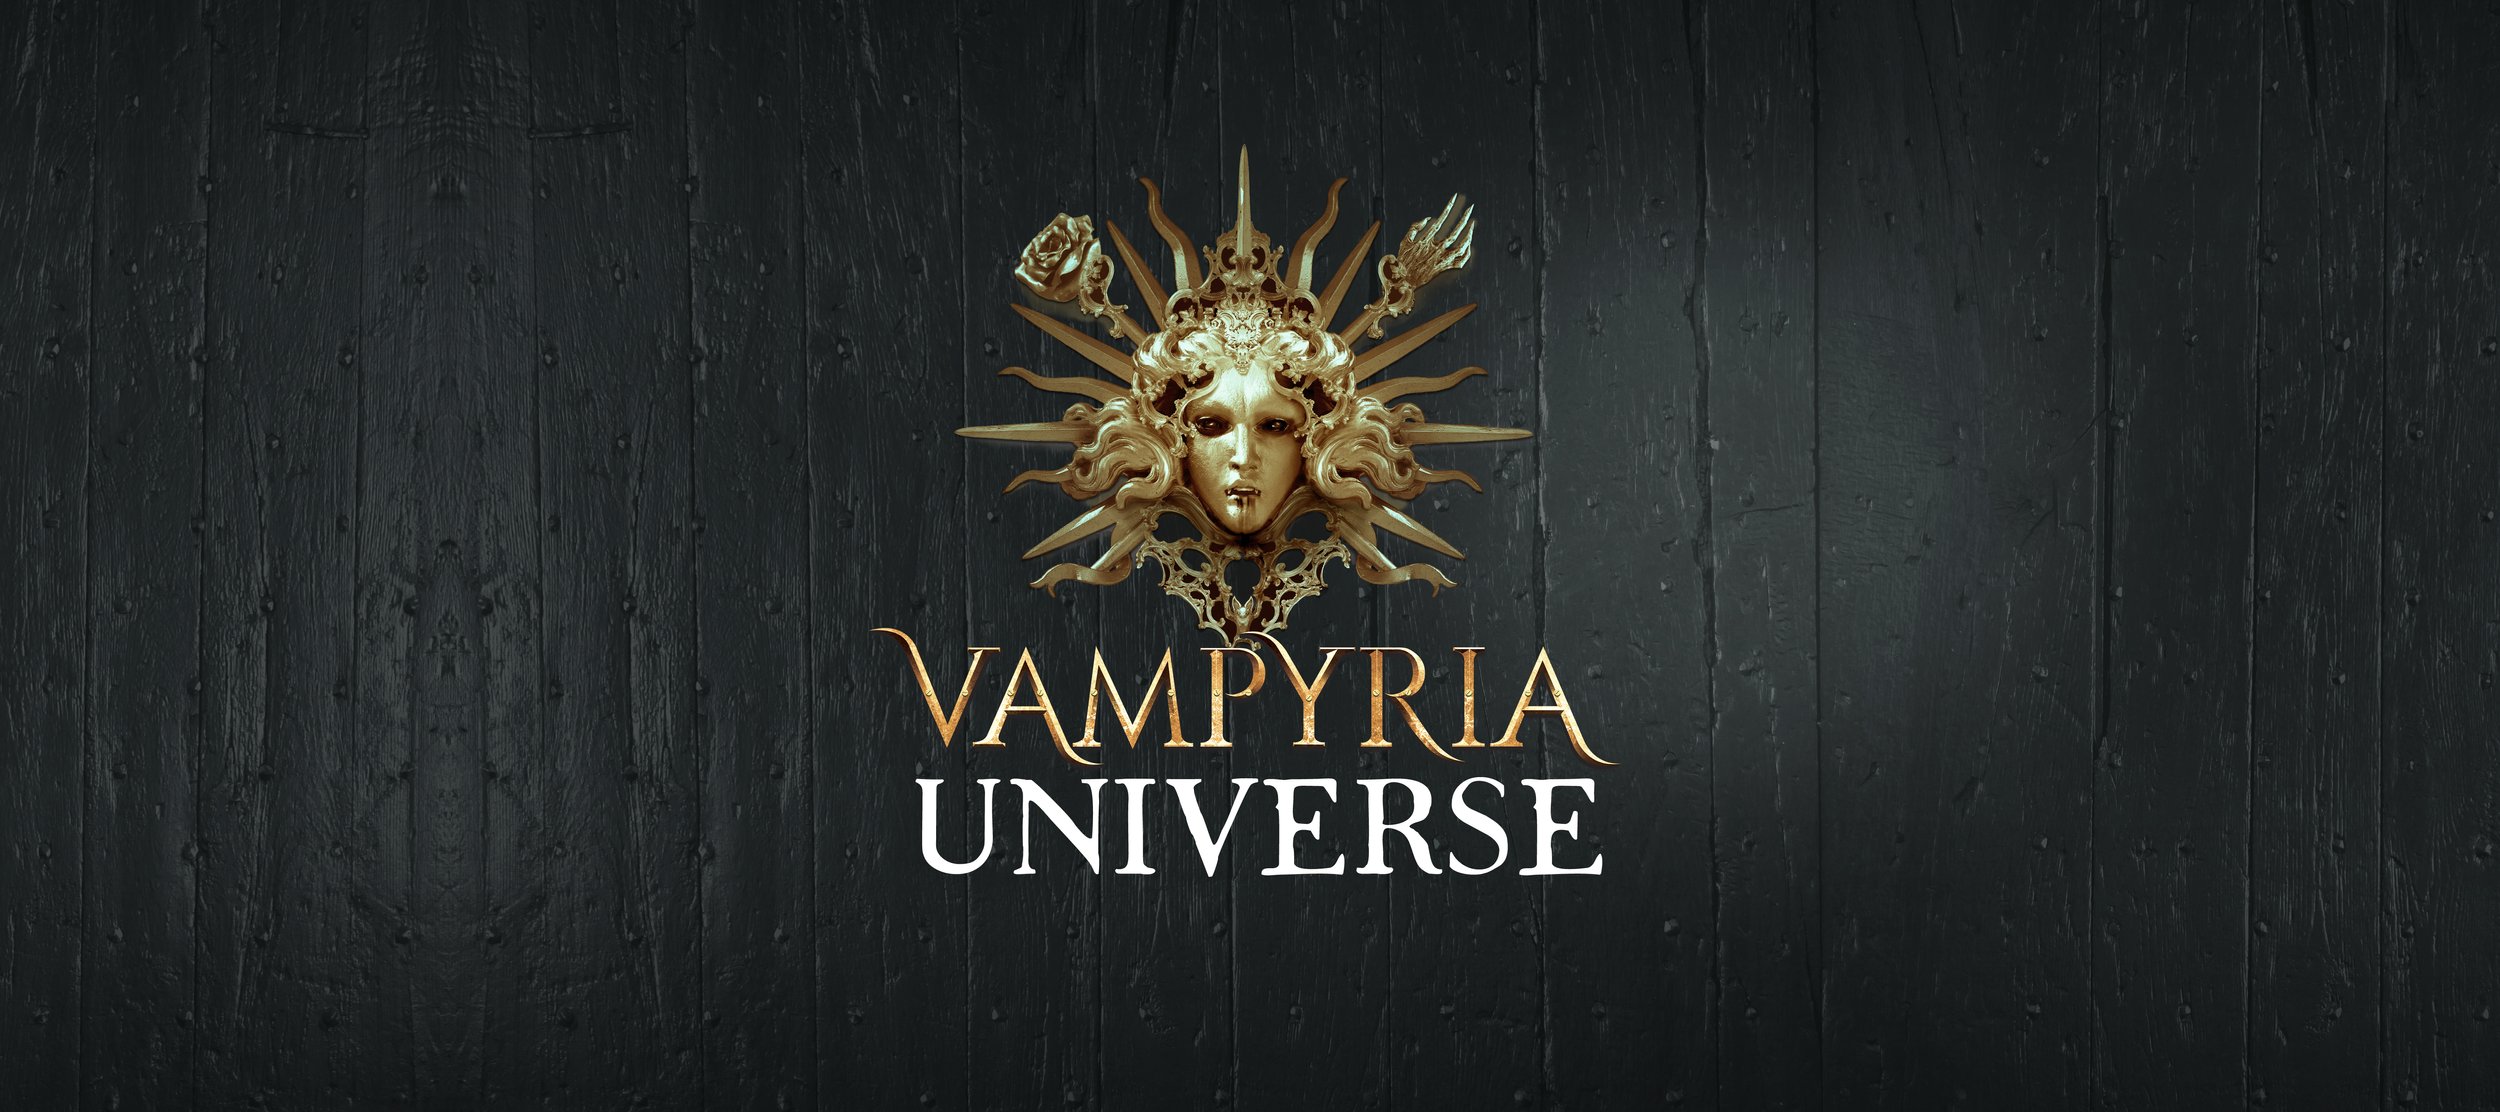 vampyria universe banner.jpg